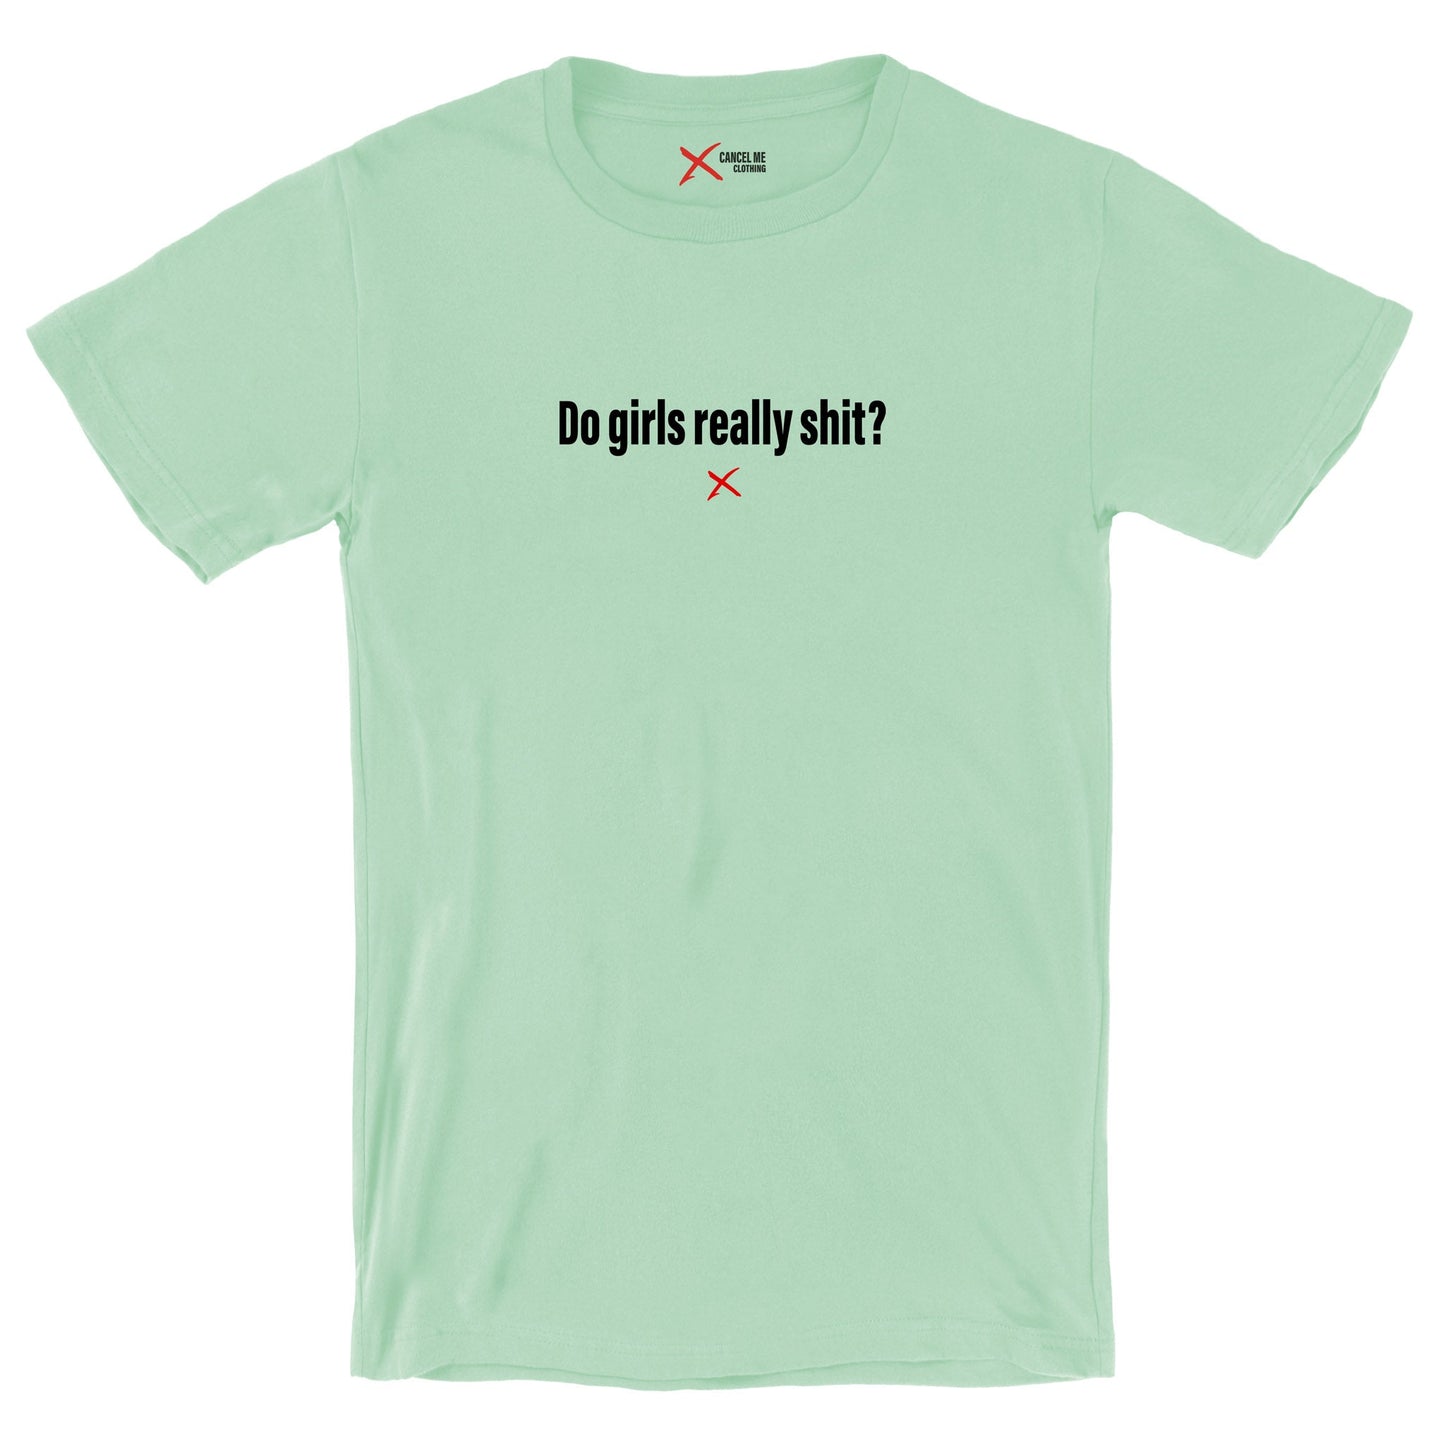 Do girls really shit? - Shirt